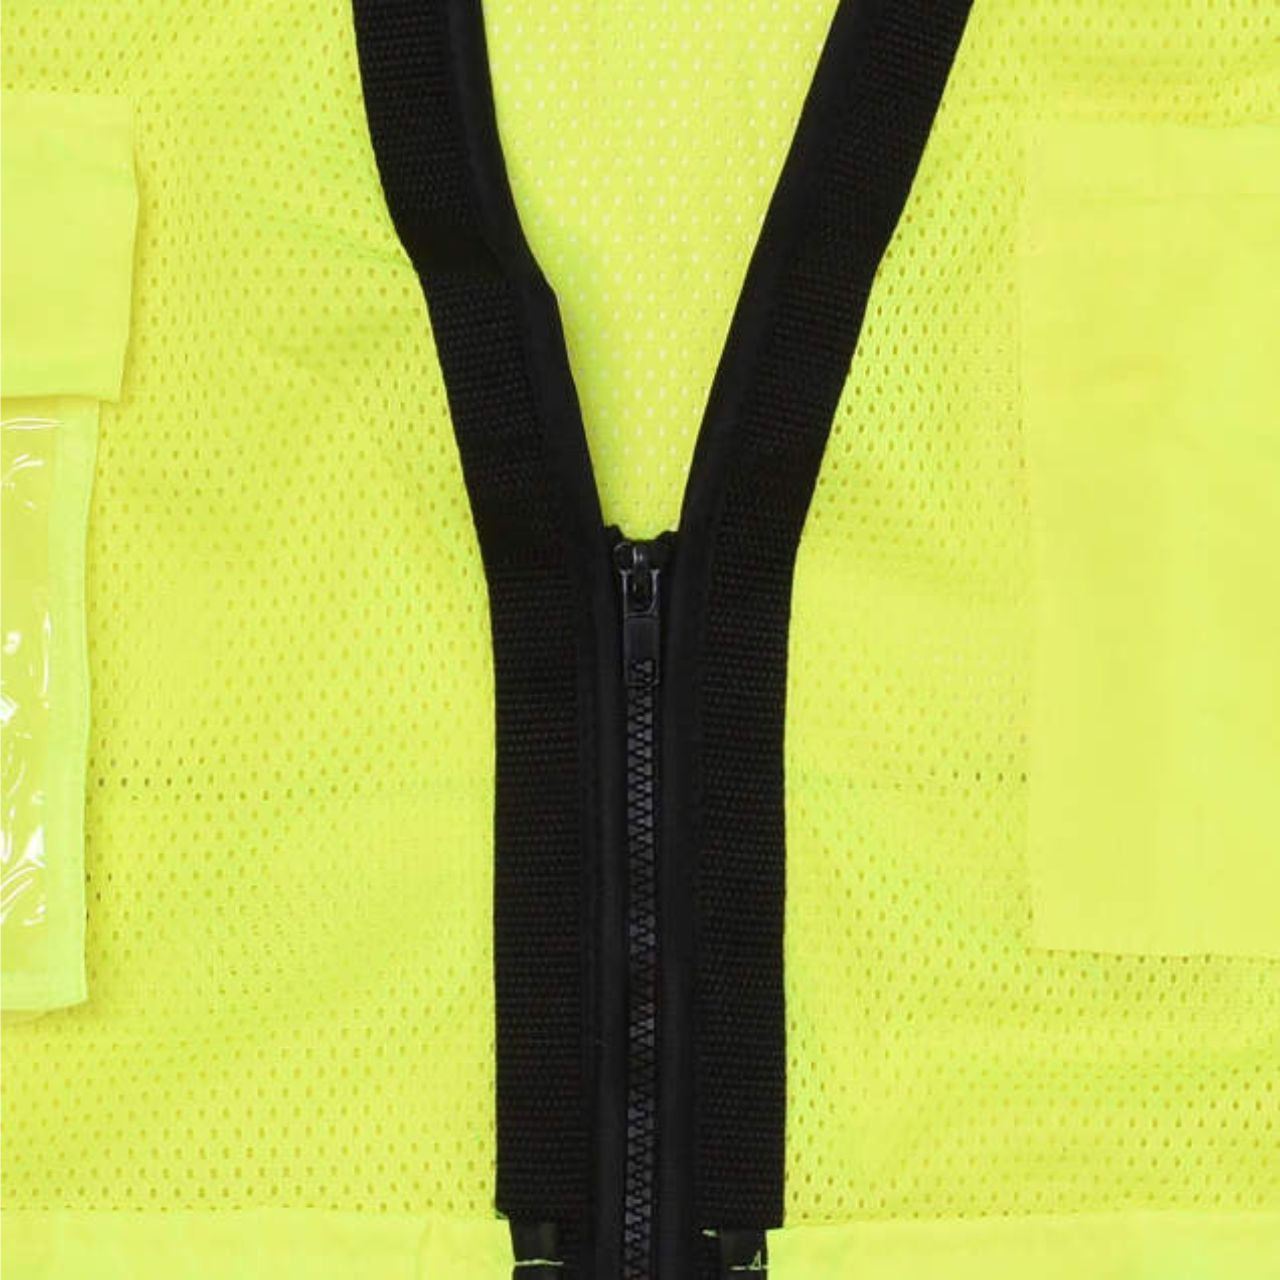 Zipper Closure Safety Vest